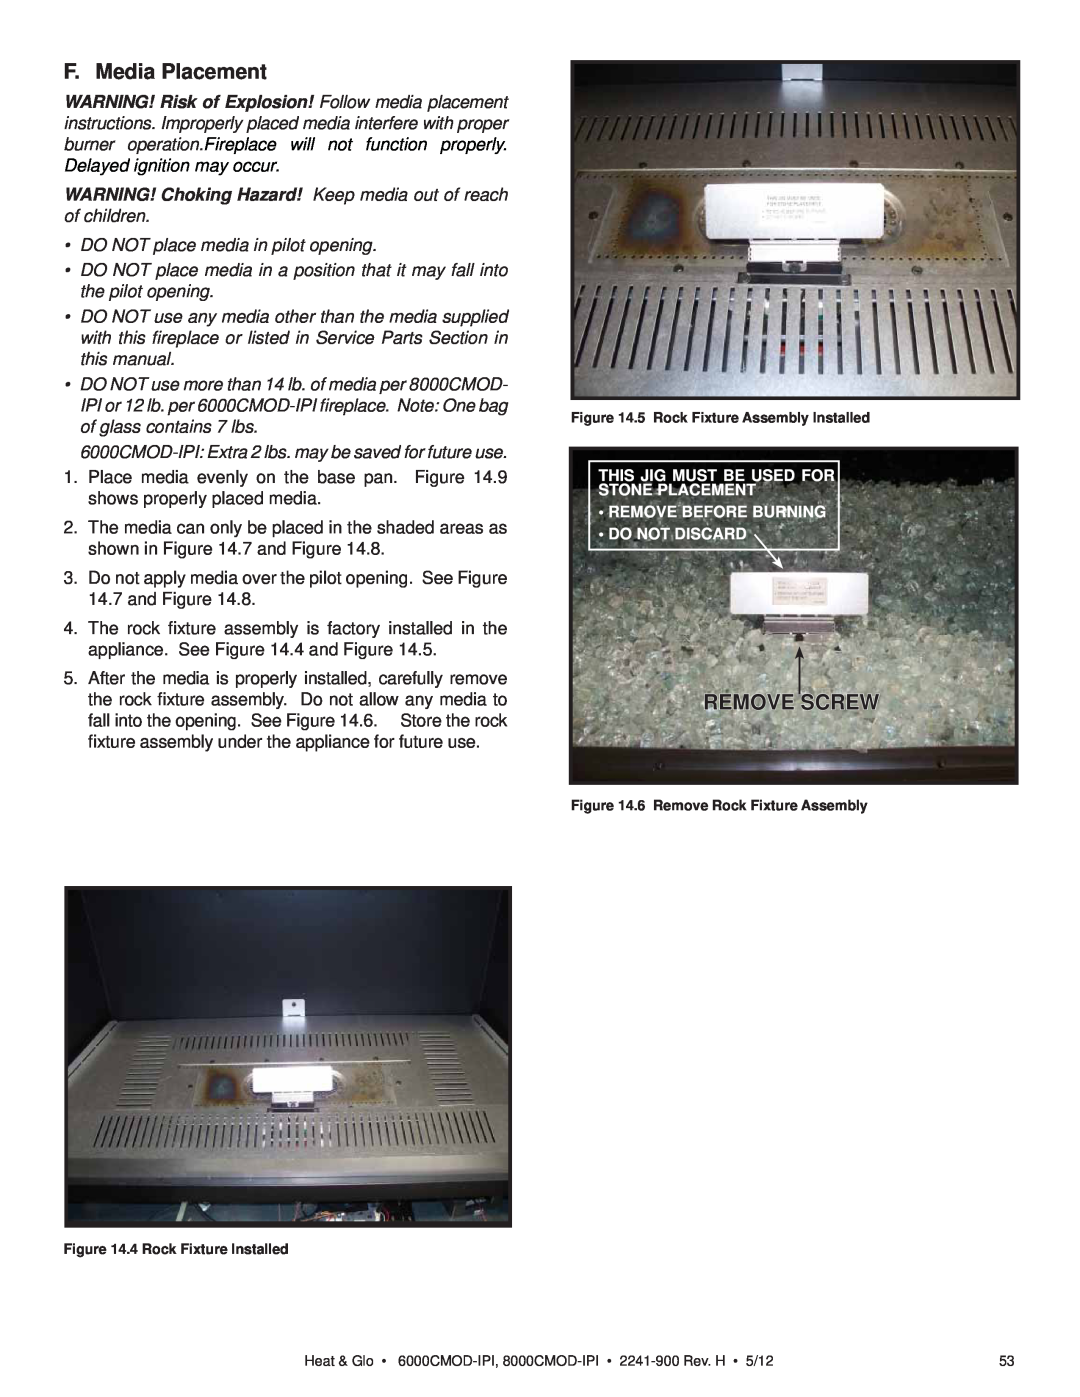 Heat & Glo LifeStyle 6000CMOD-IPI, 8000CMOD-IPI owner manual F. Media Placement, Remove Screw 